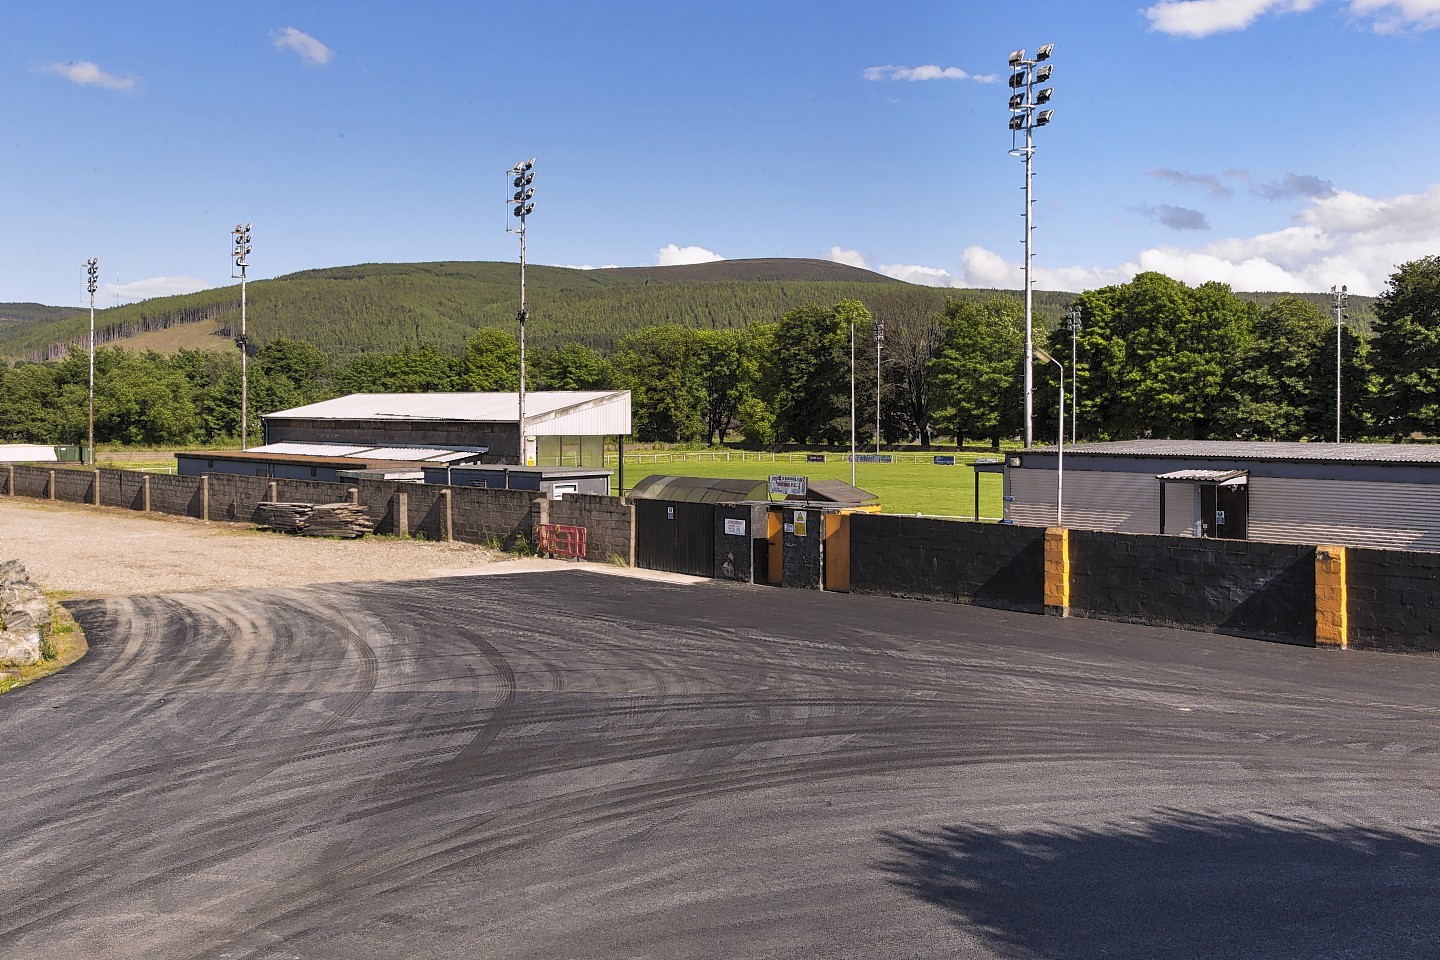 Rothes' home ground, Mackessack Park